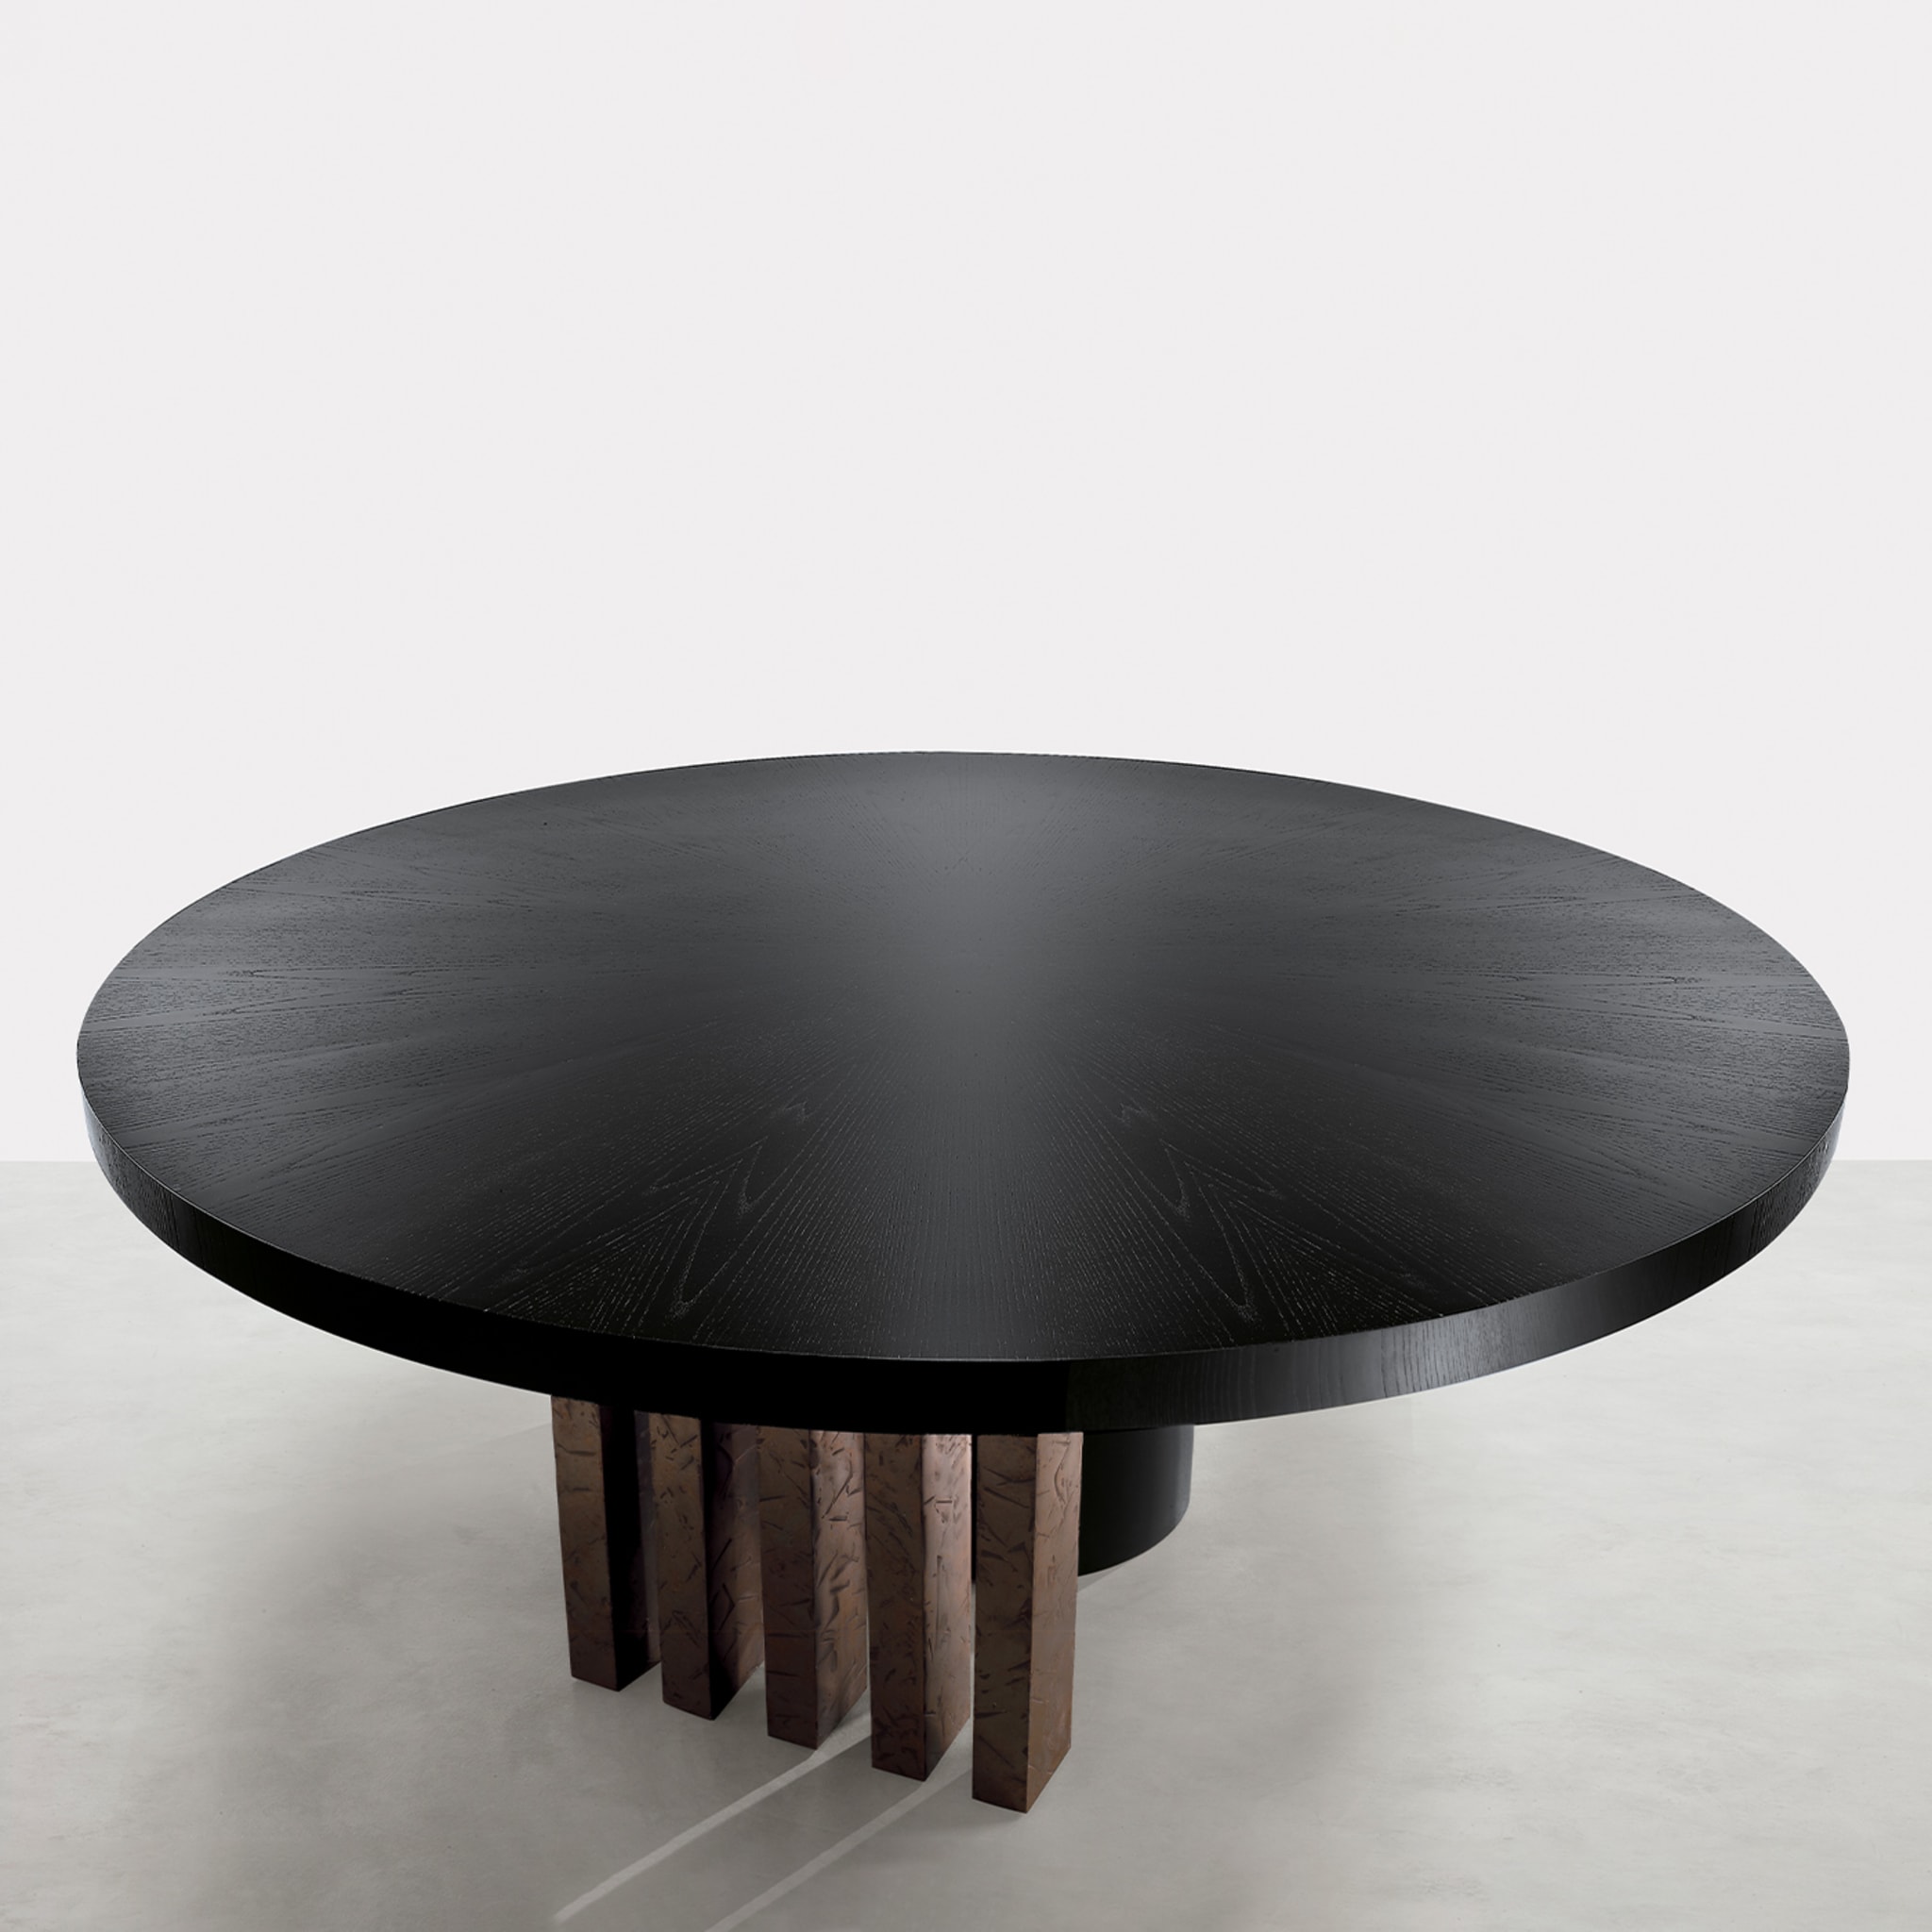 Ozark Round Table by Dainelli Studio - Alternative view 1